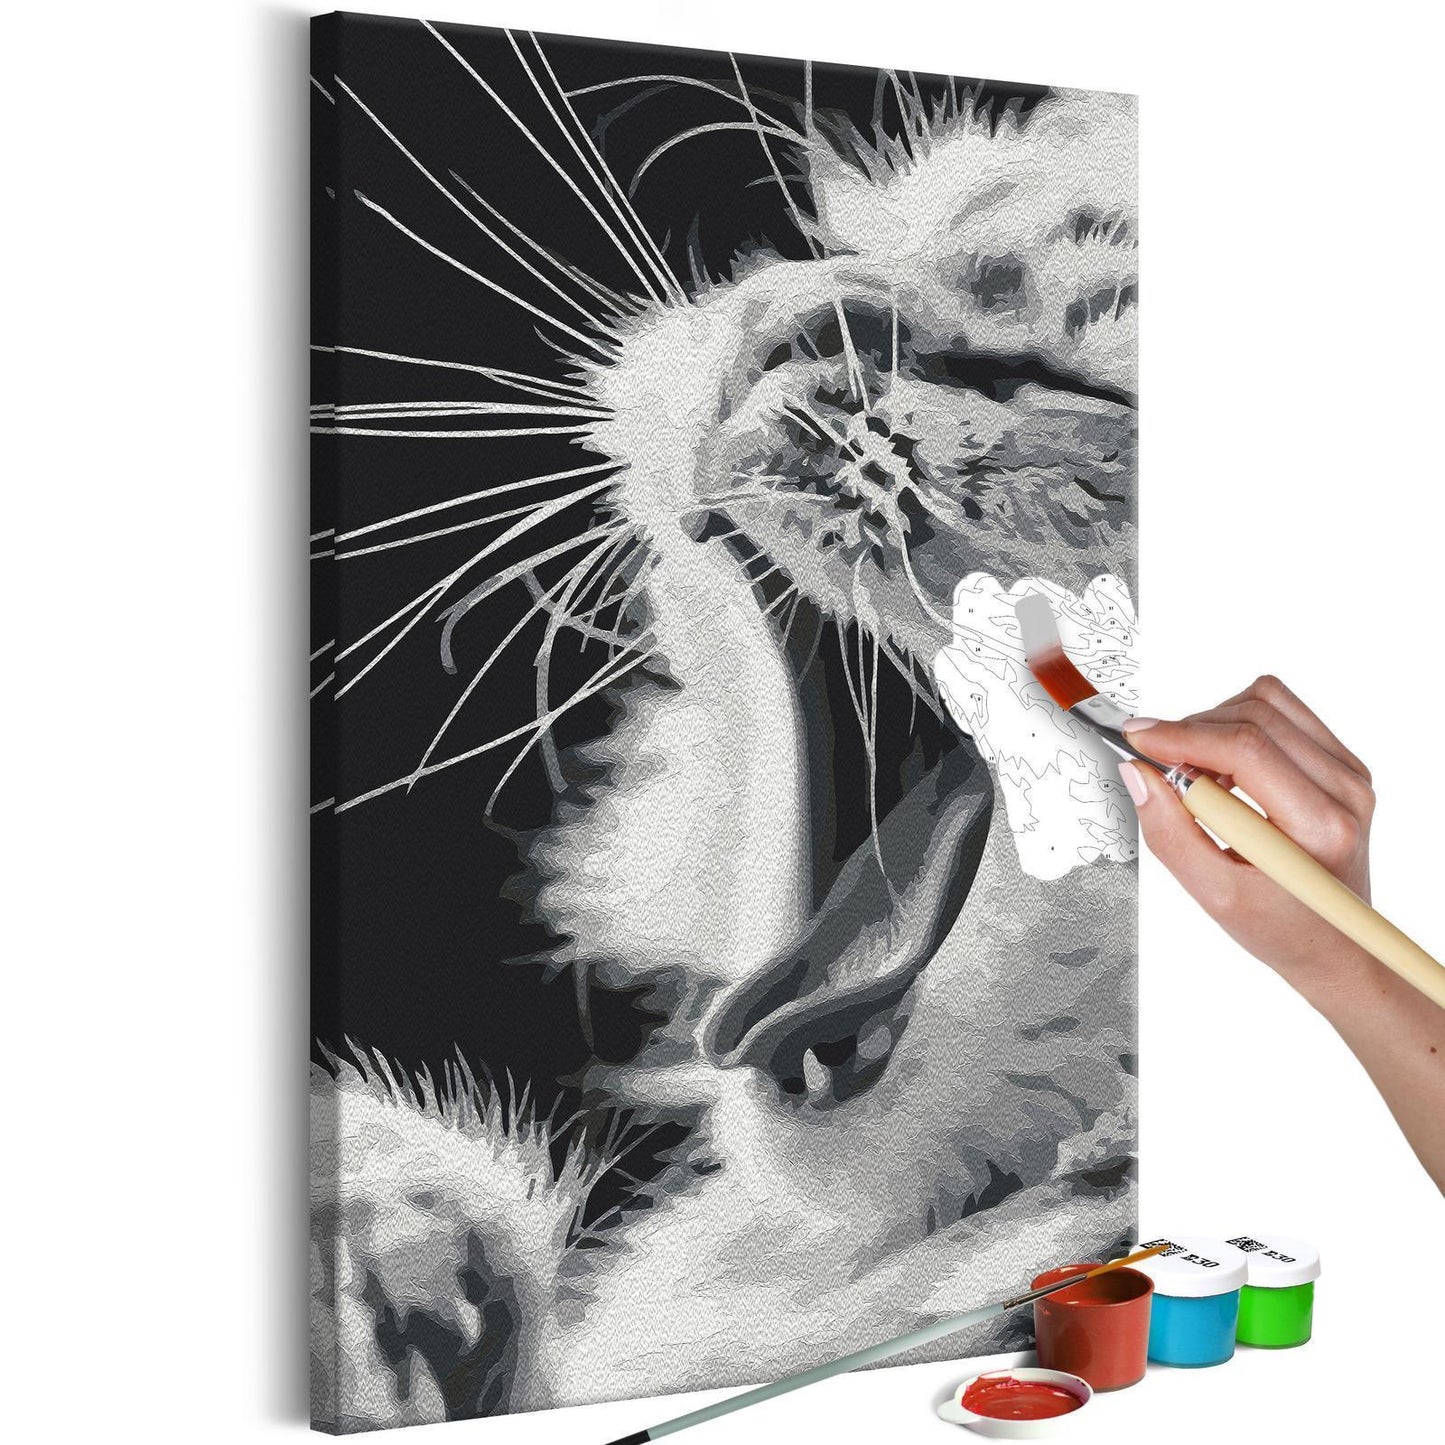 DIY Canvas Painting - Yawning Kitten 